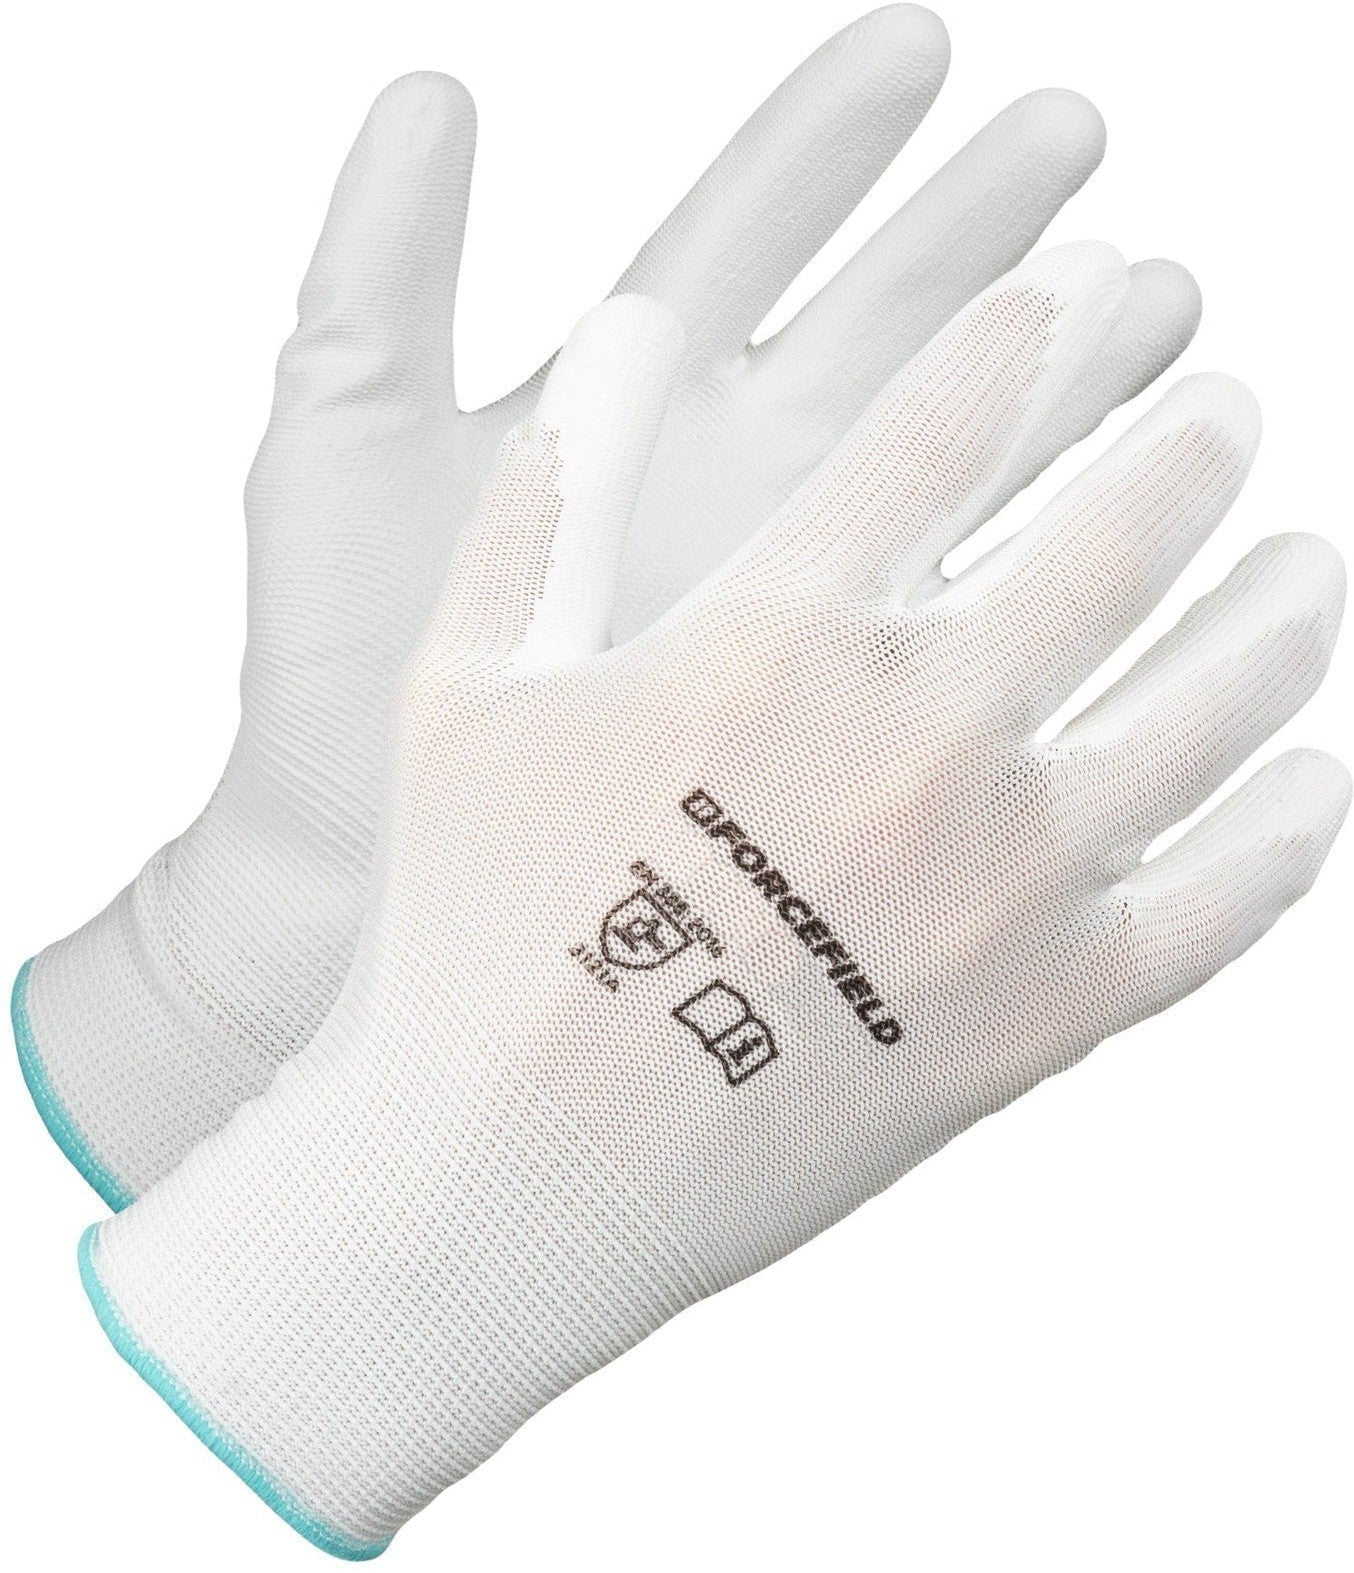 Forcefield - Small White Nylon Polyurethane Palm Coated Glove - 00413407WHT